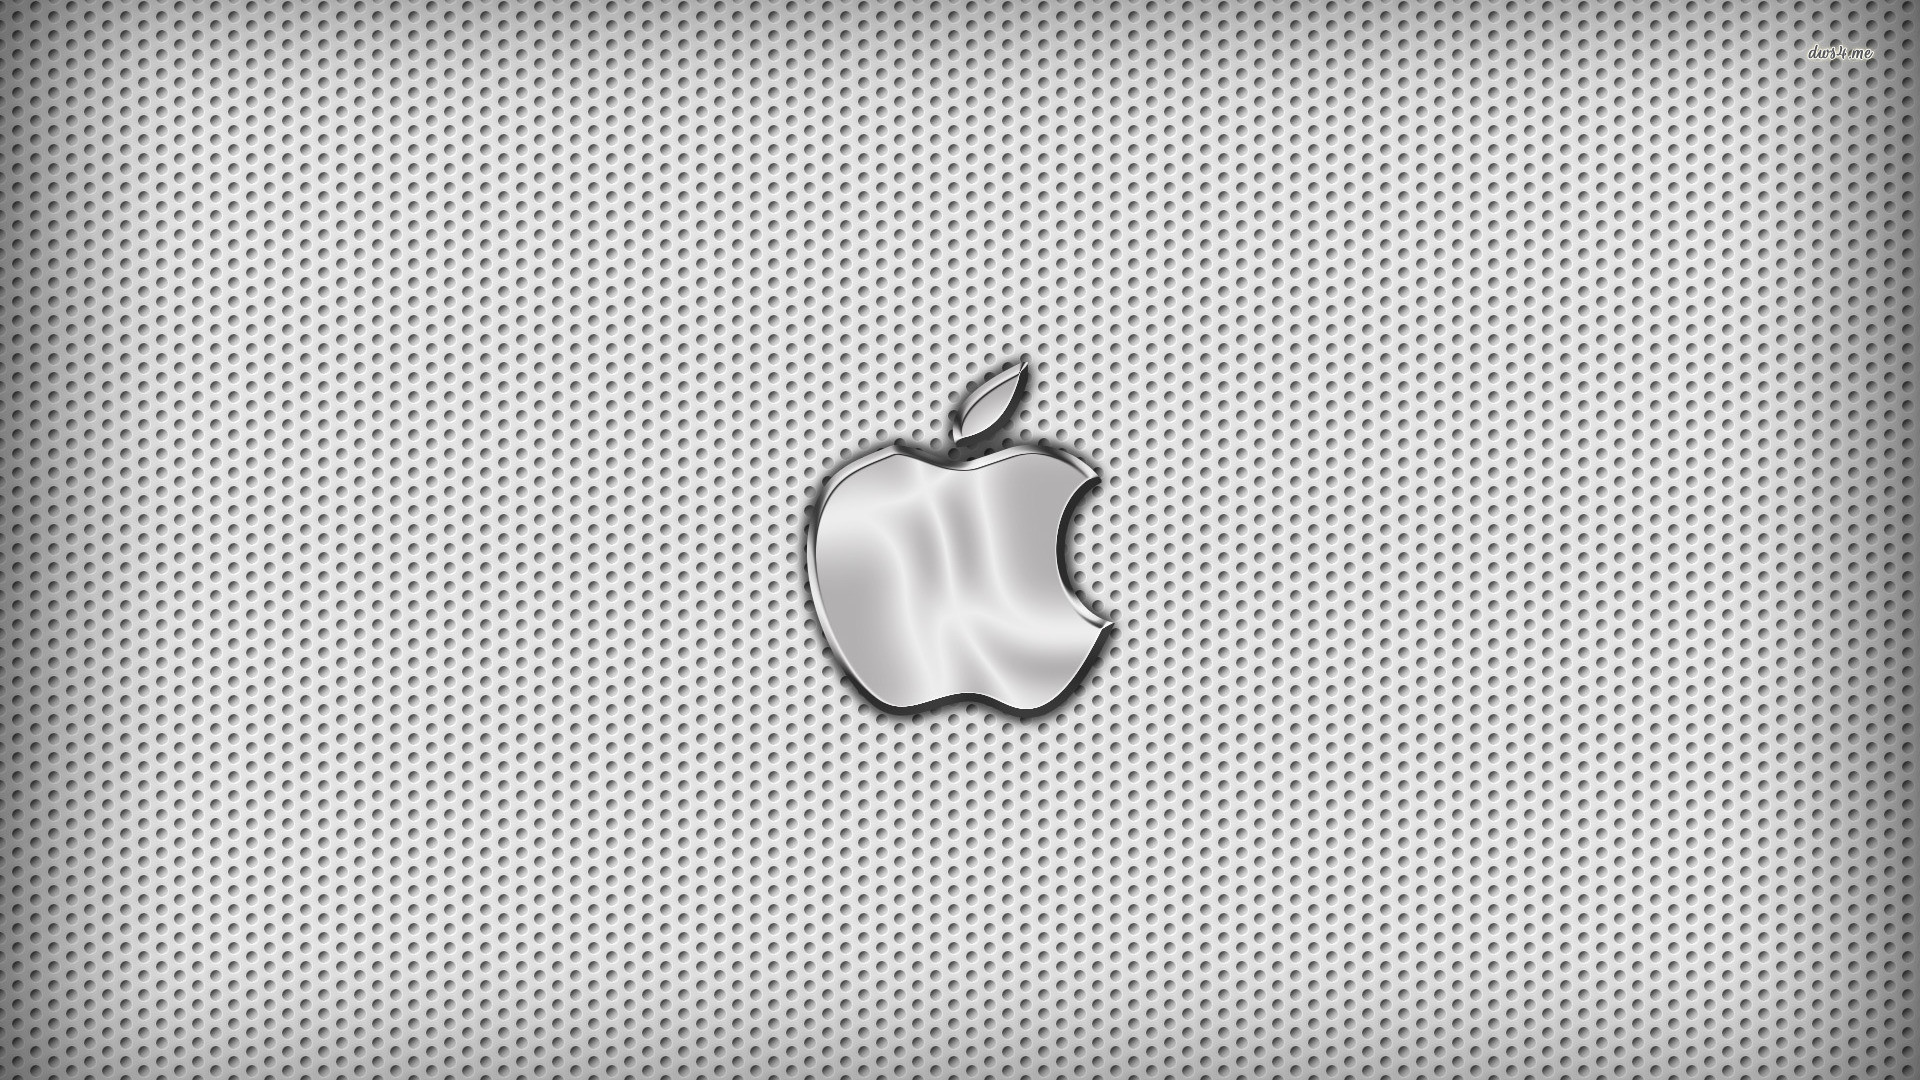 1920x1080 Dotted Apple logo wallpaper